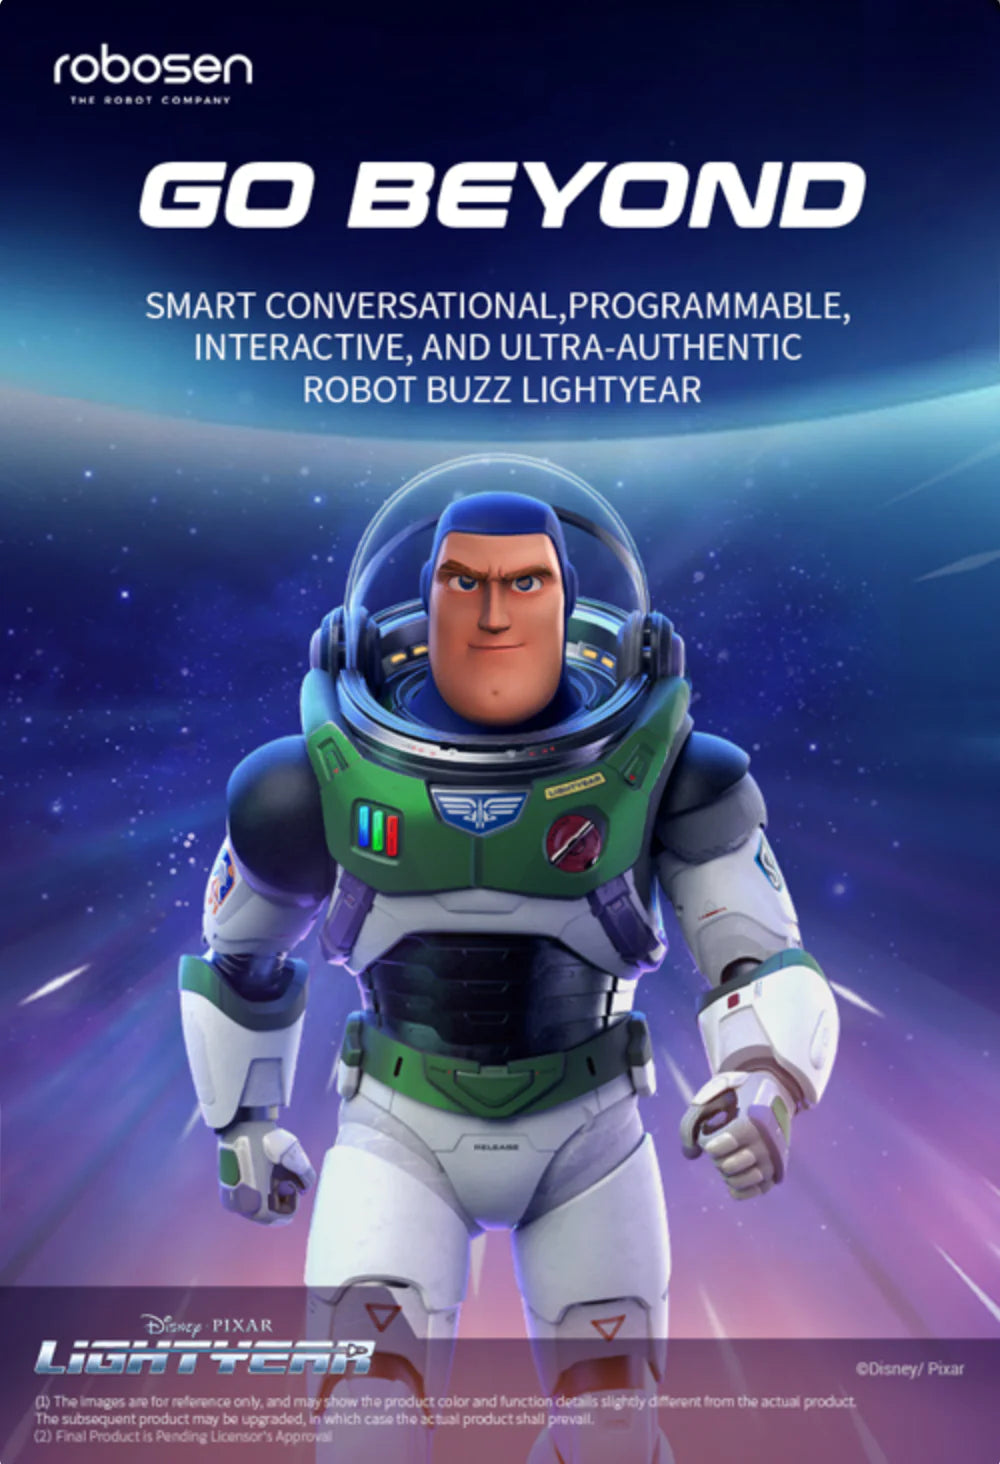 Robosen Buzz Lightyear Infinity Pack (Limited Edition) Interactive Robot : RELEASE DELAYED ETA Q2